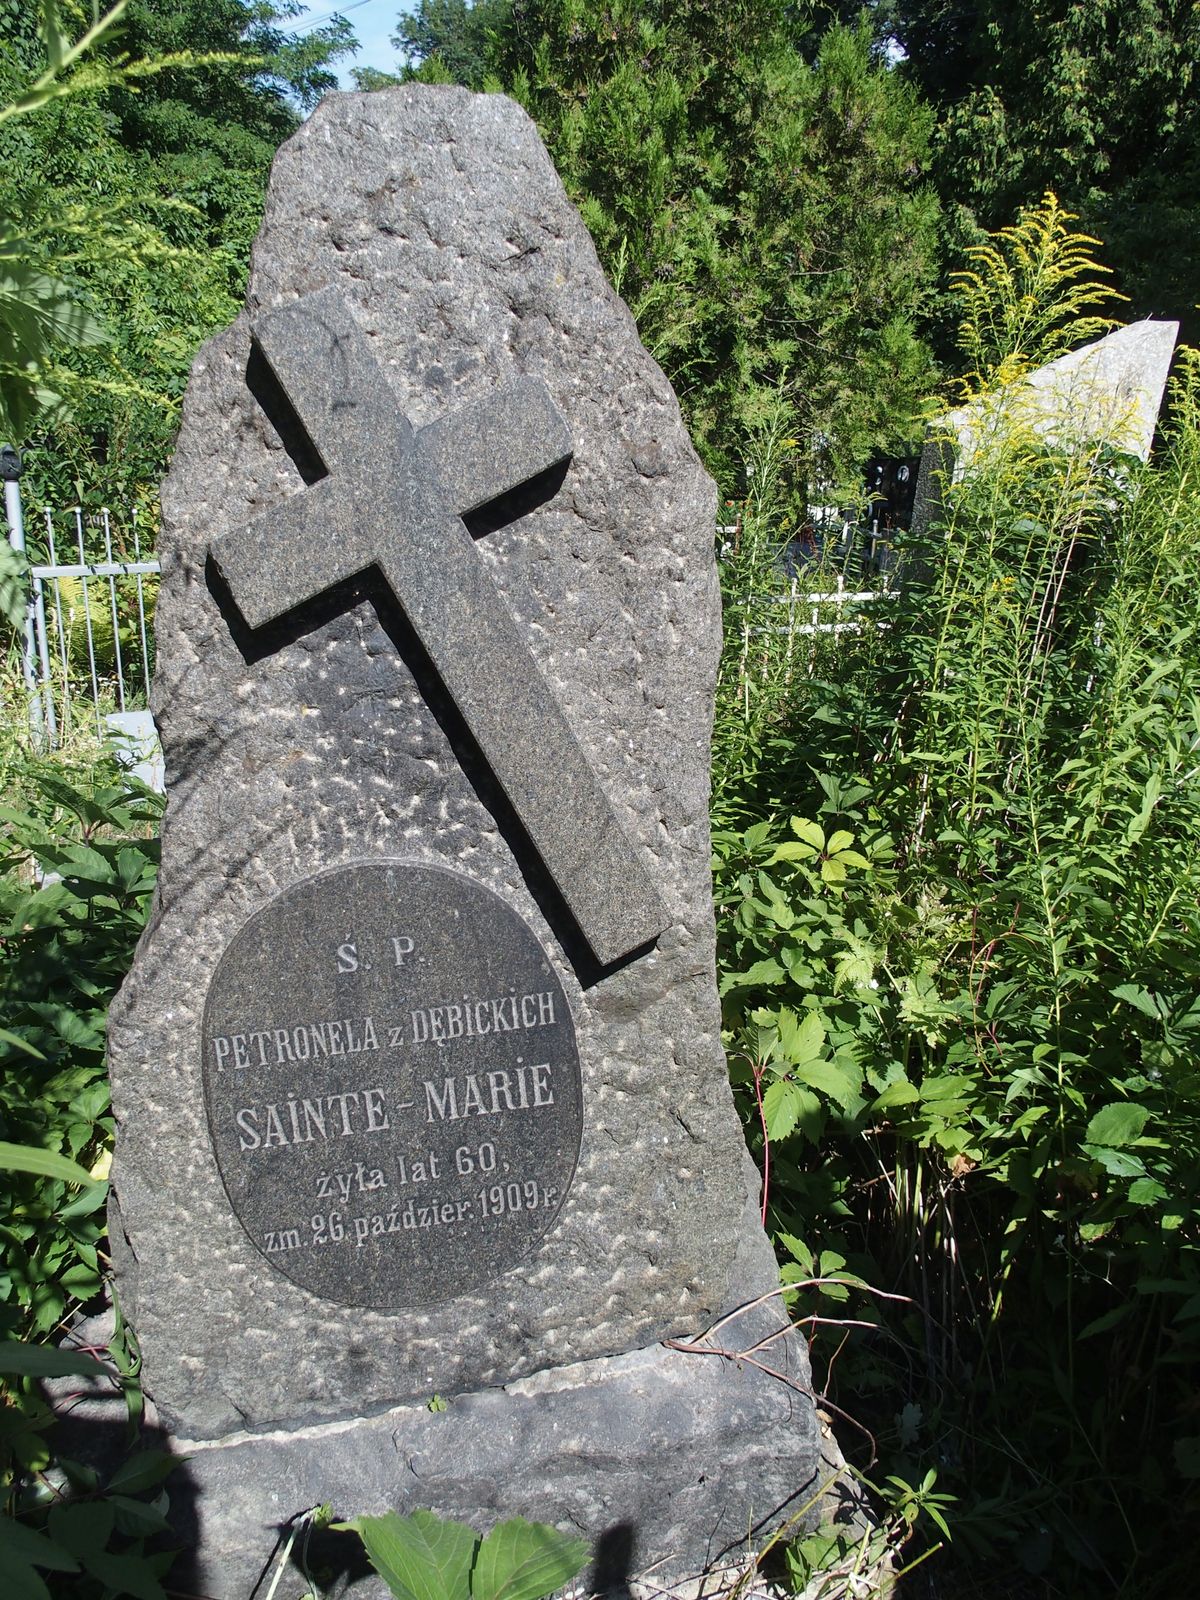 Tombstone of Petronela Sainte-Marie, Baykova cemetery in Kiev, as of 2021